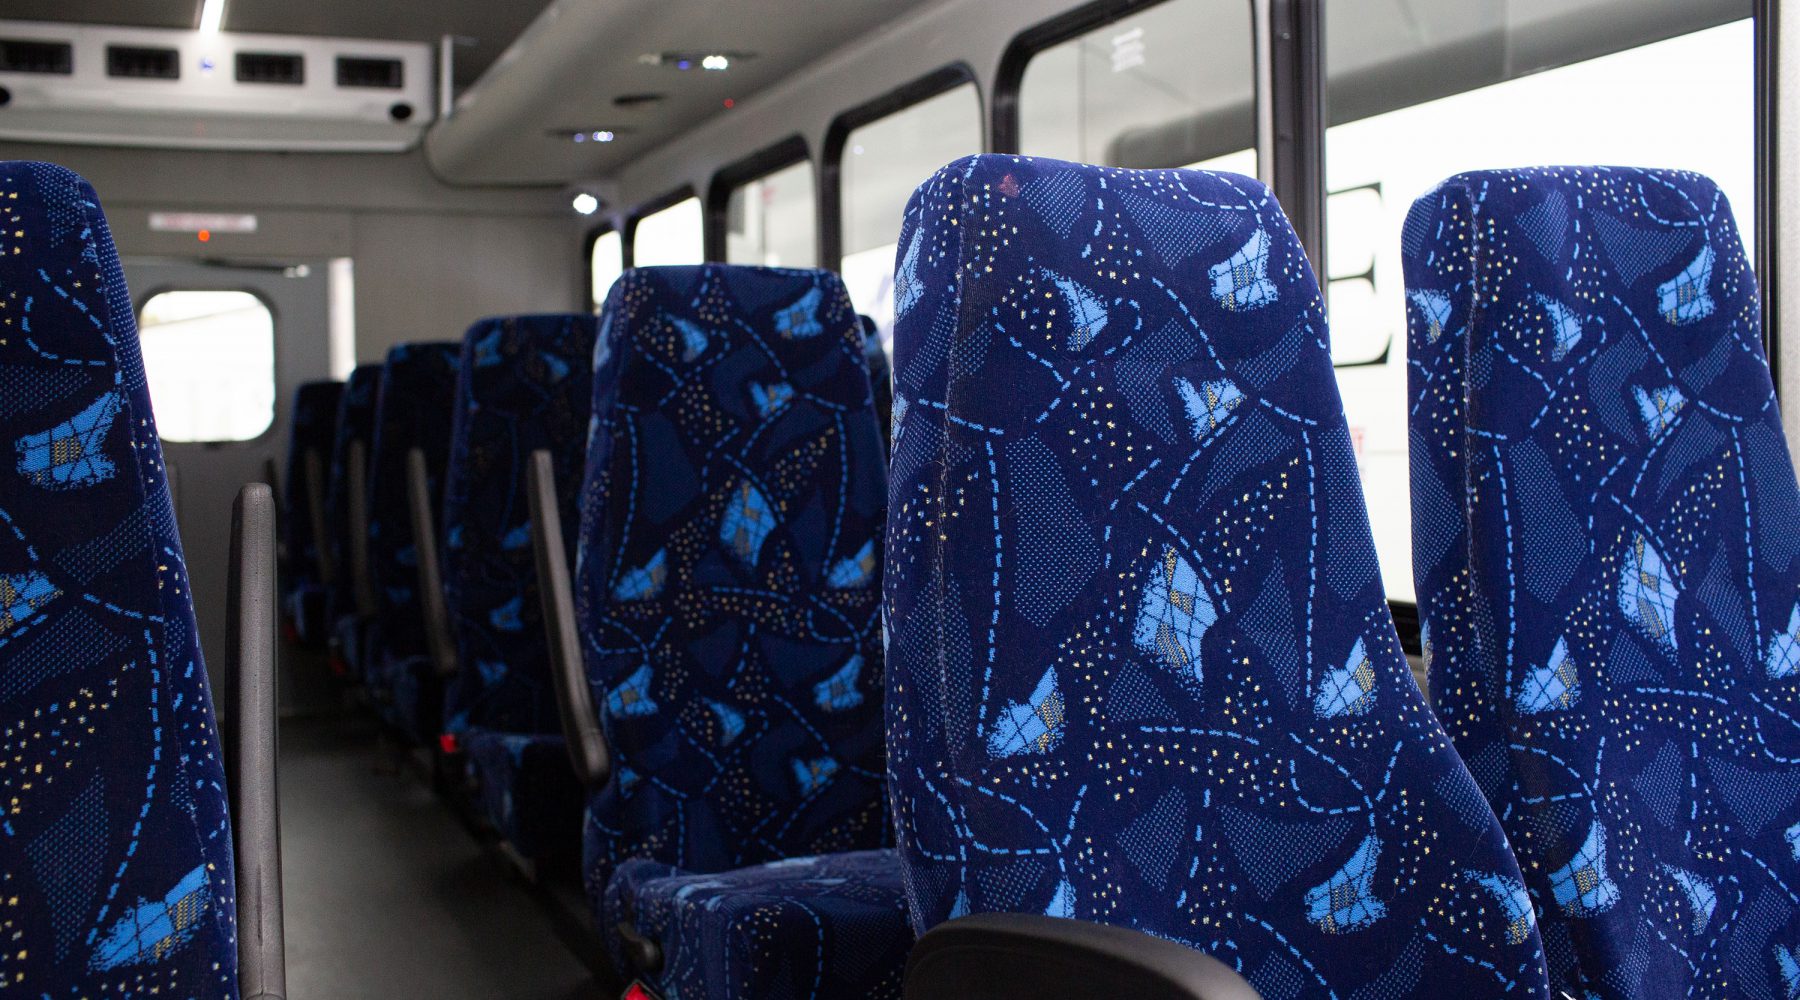 Interior of the 25-passenger bus